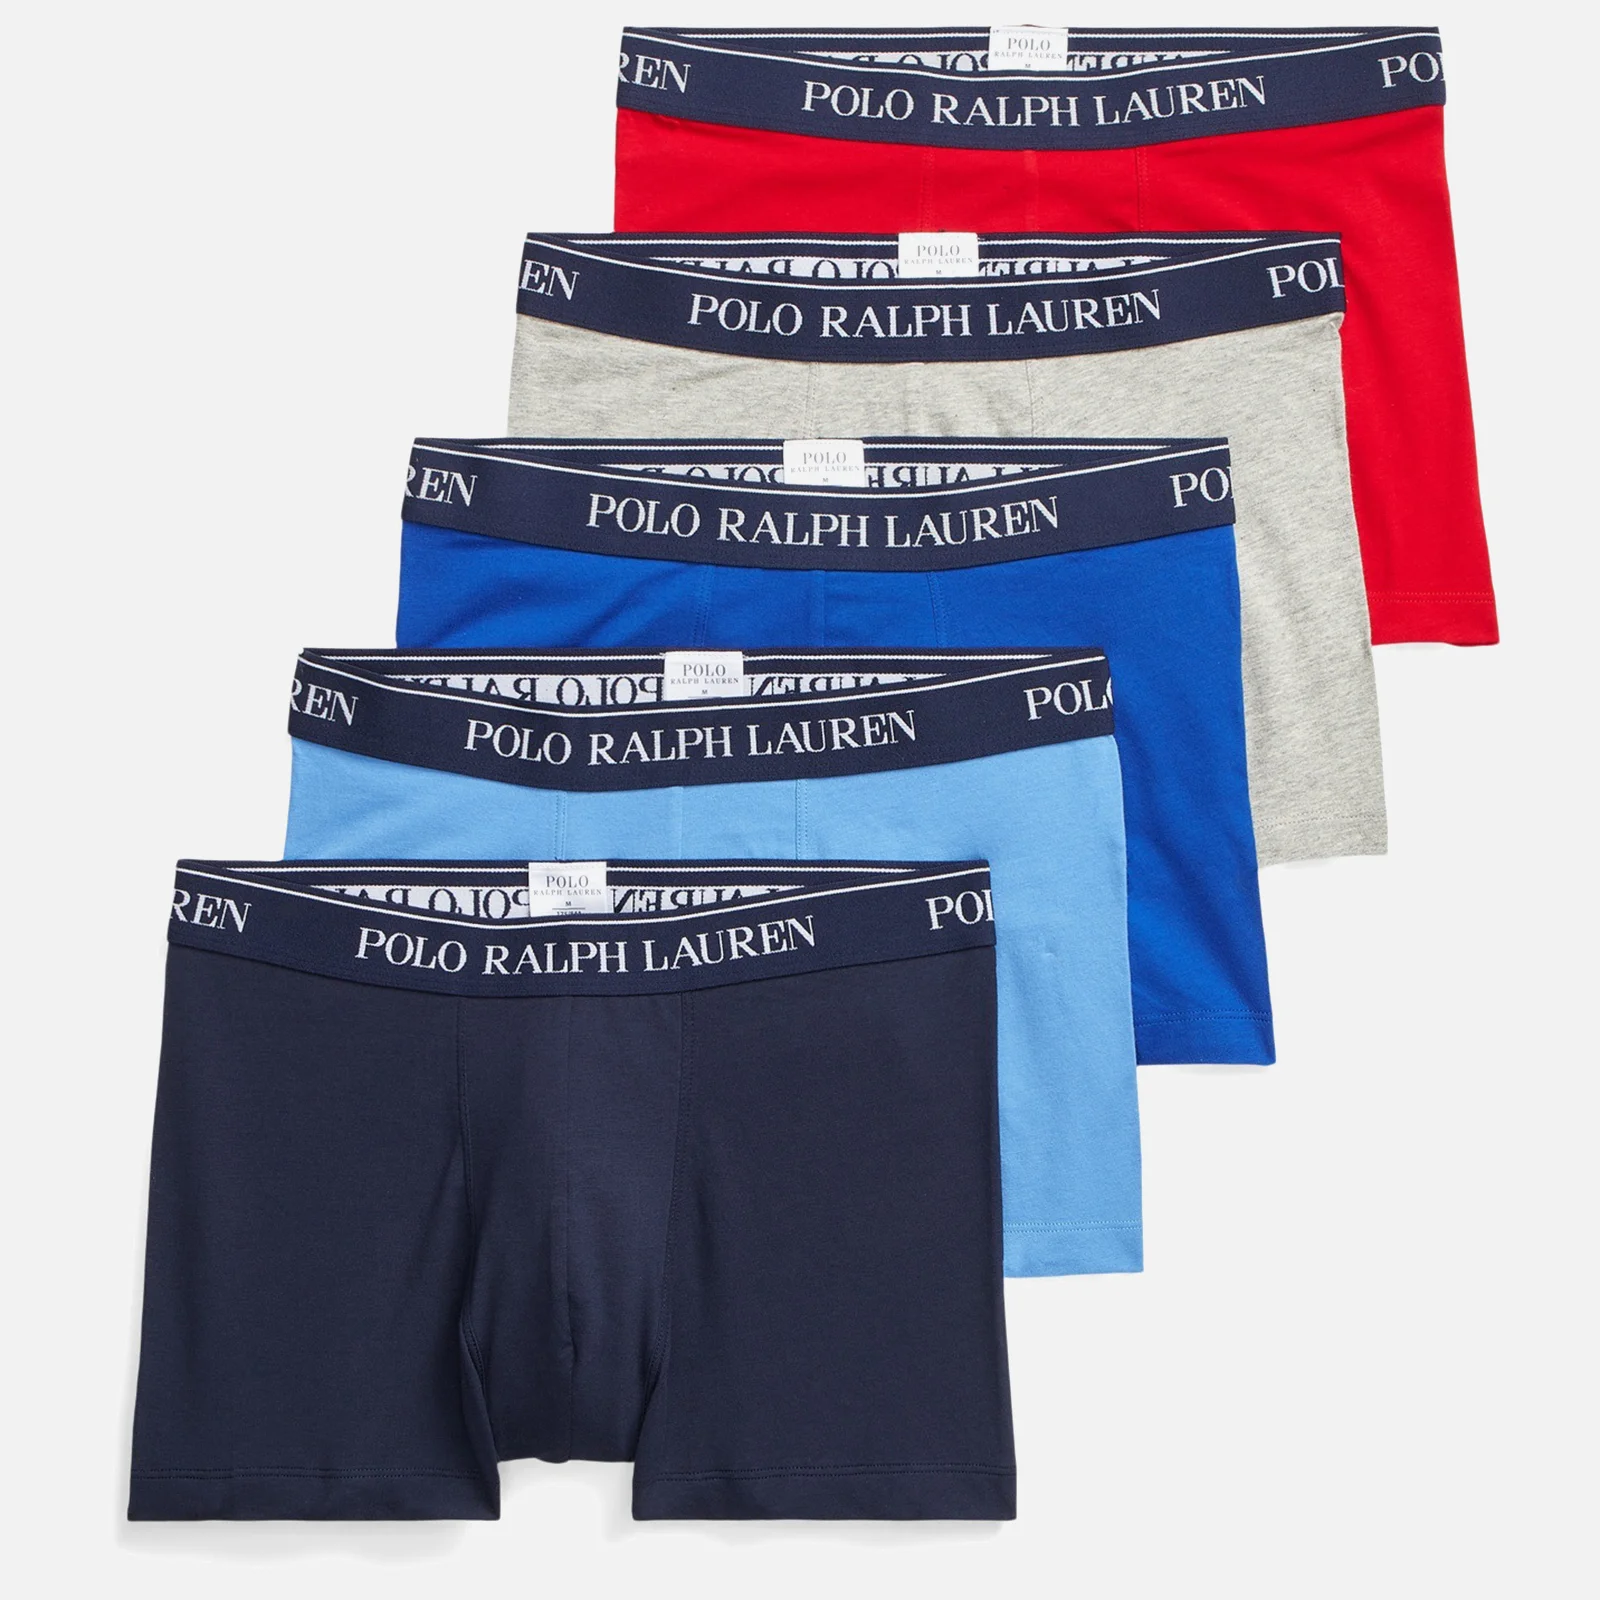 Polo Ralph Lauren Men's Classic 5 Pack Trunks - Red/Grey/Royal/Blue/Navy Image 1